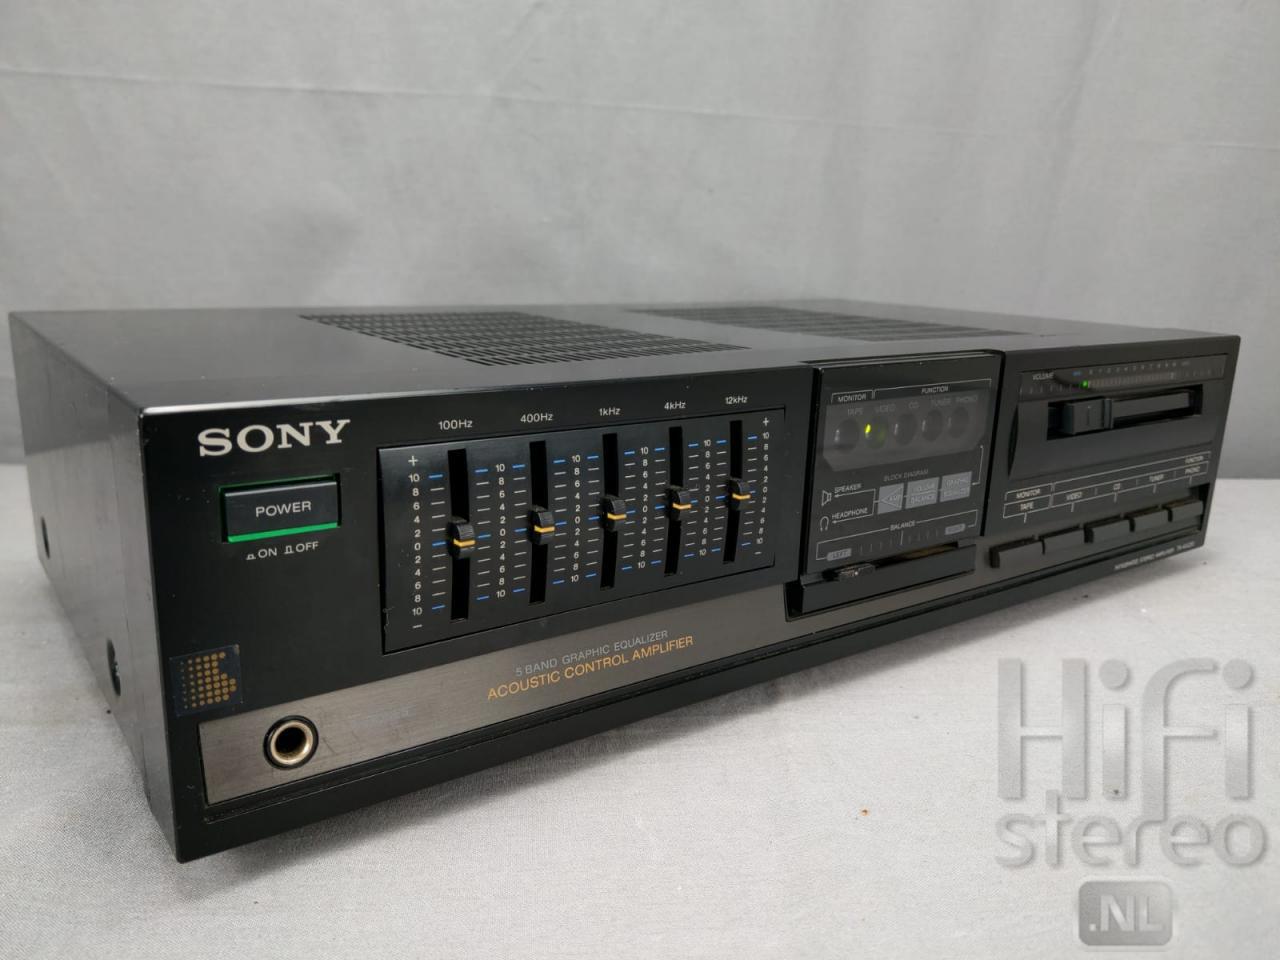 delicaat ontwerper documentaire Sony TA-AX230 versterker te koop op hifi stereo.nl